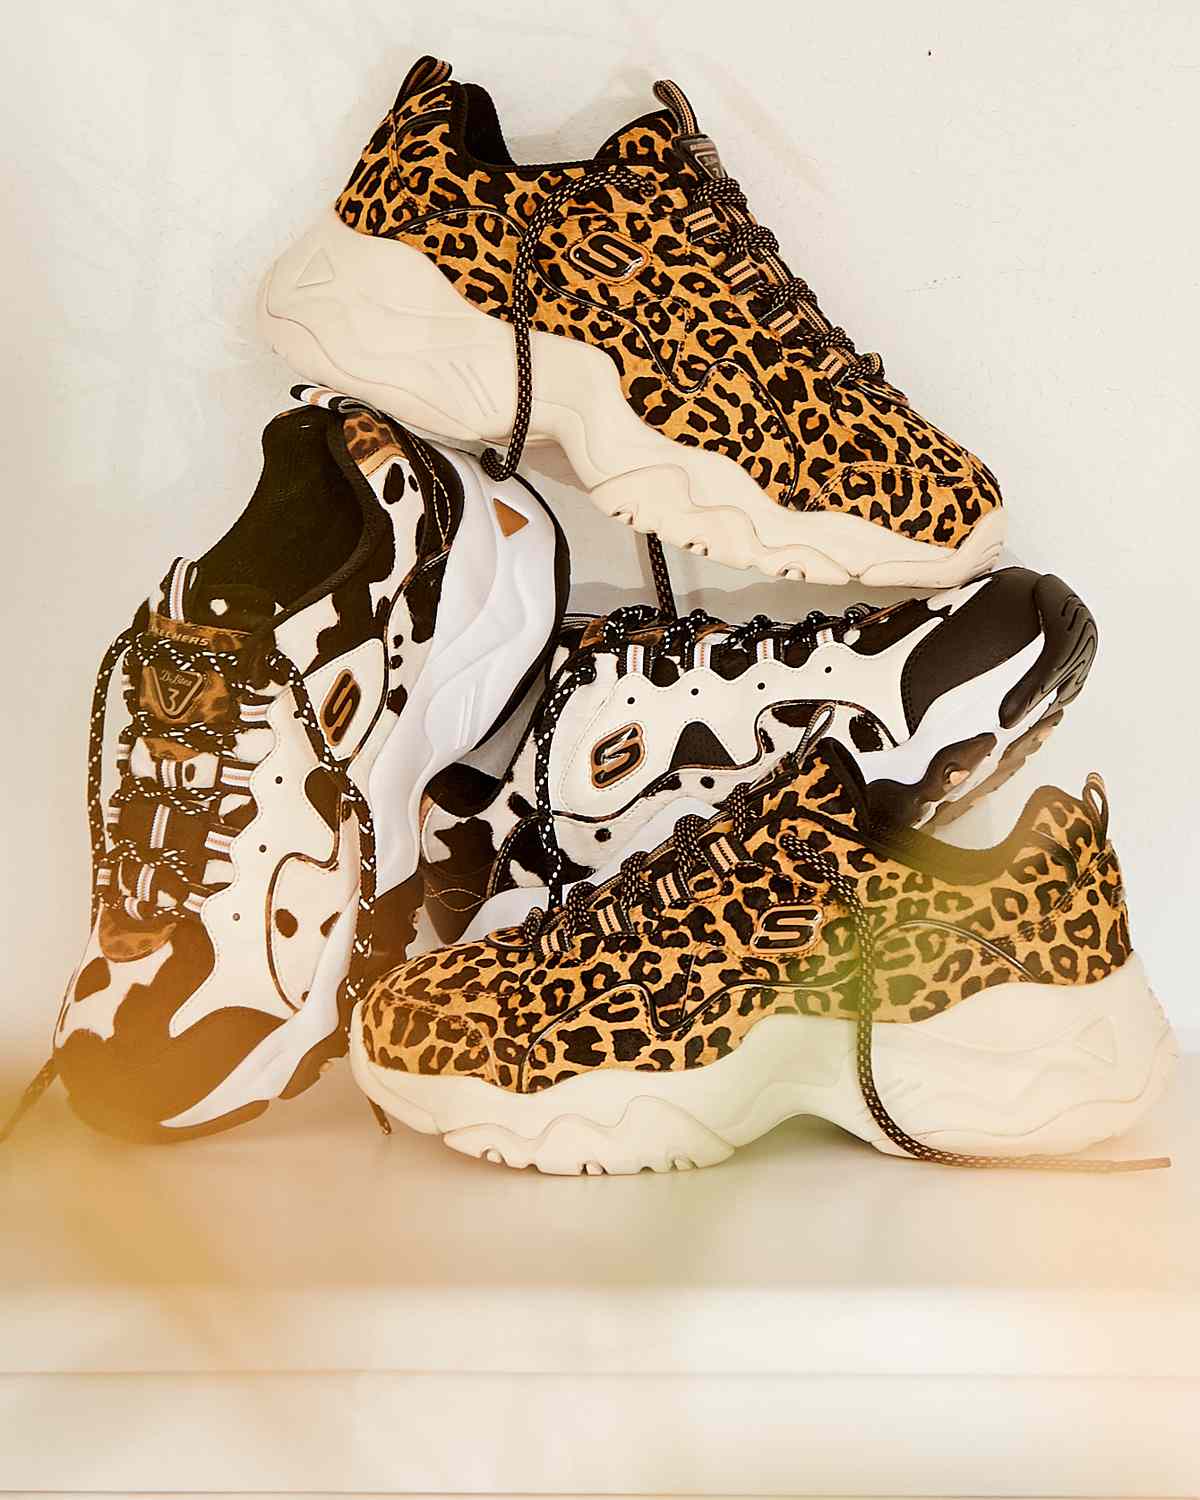 Sætte paperback let at håndtere Skechers Leopard Print Sneakers Hot Sale - www.bridgepartnersllc.com  1695442566